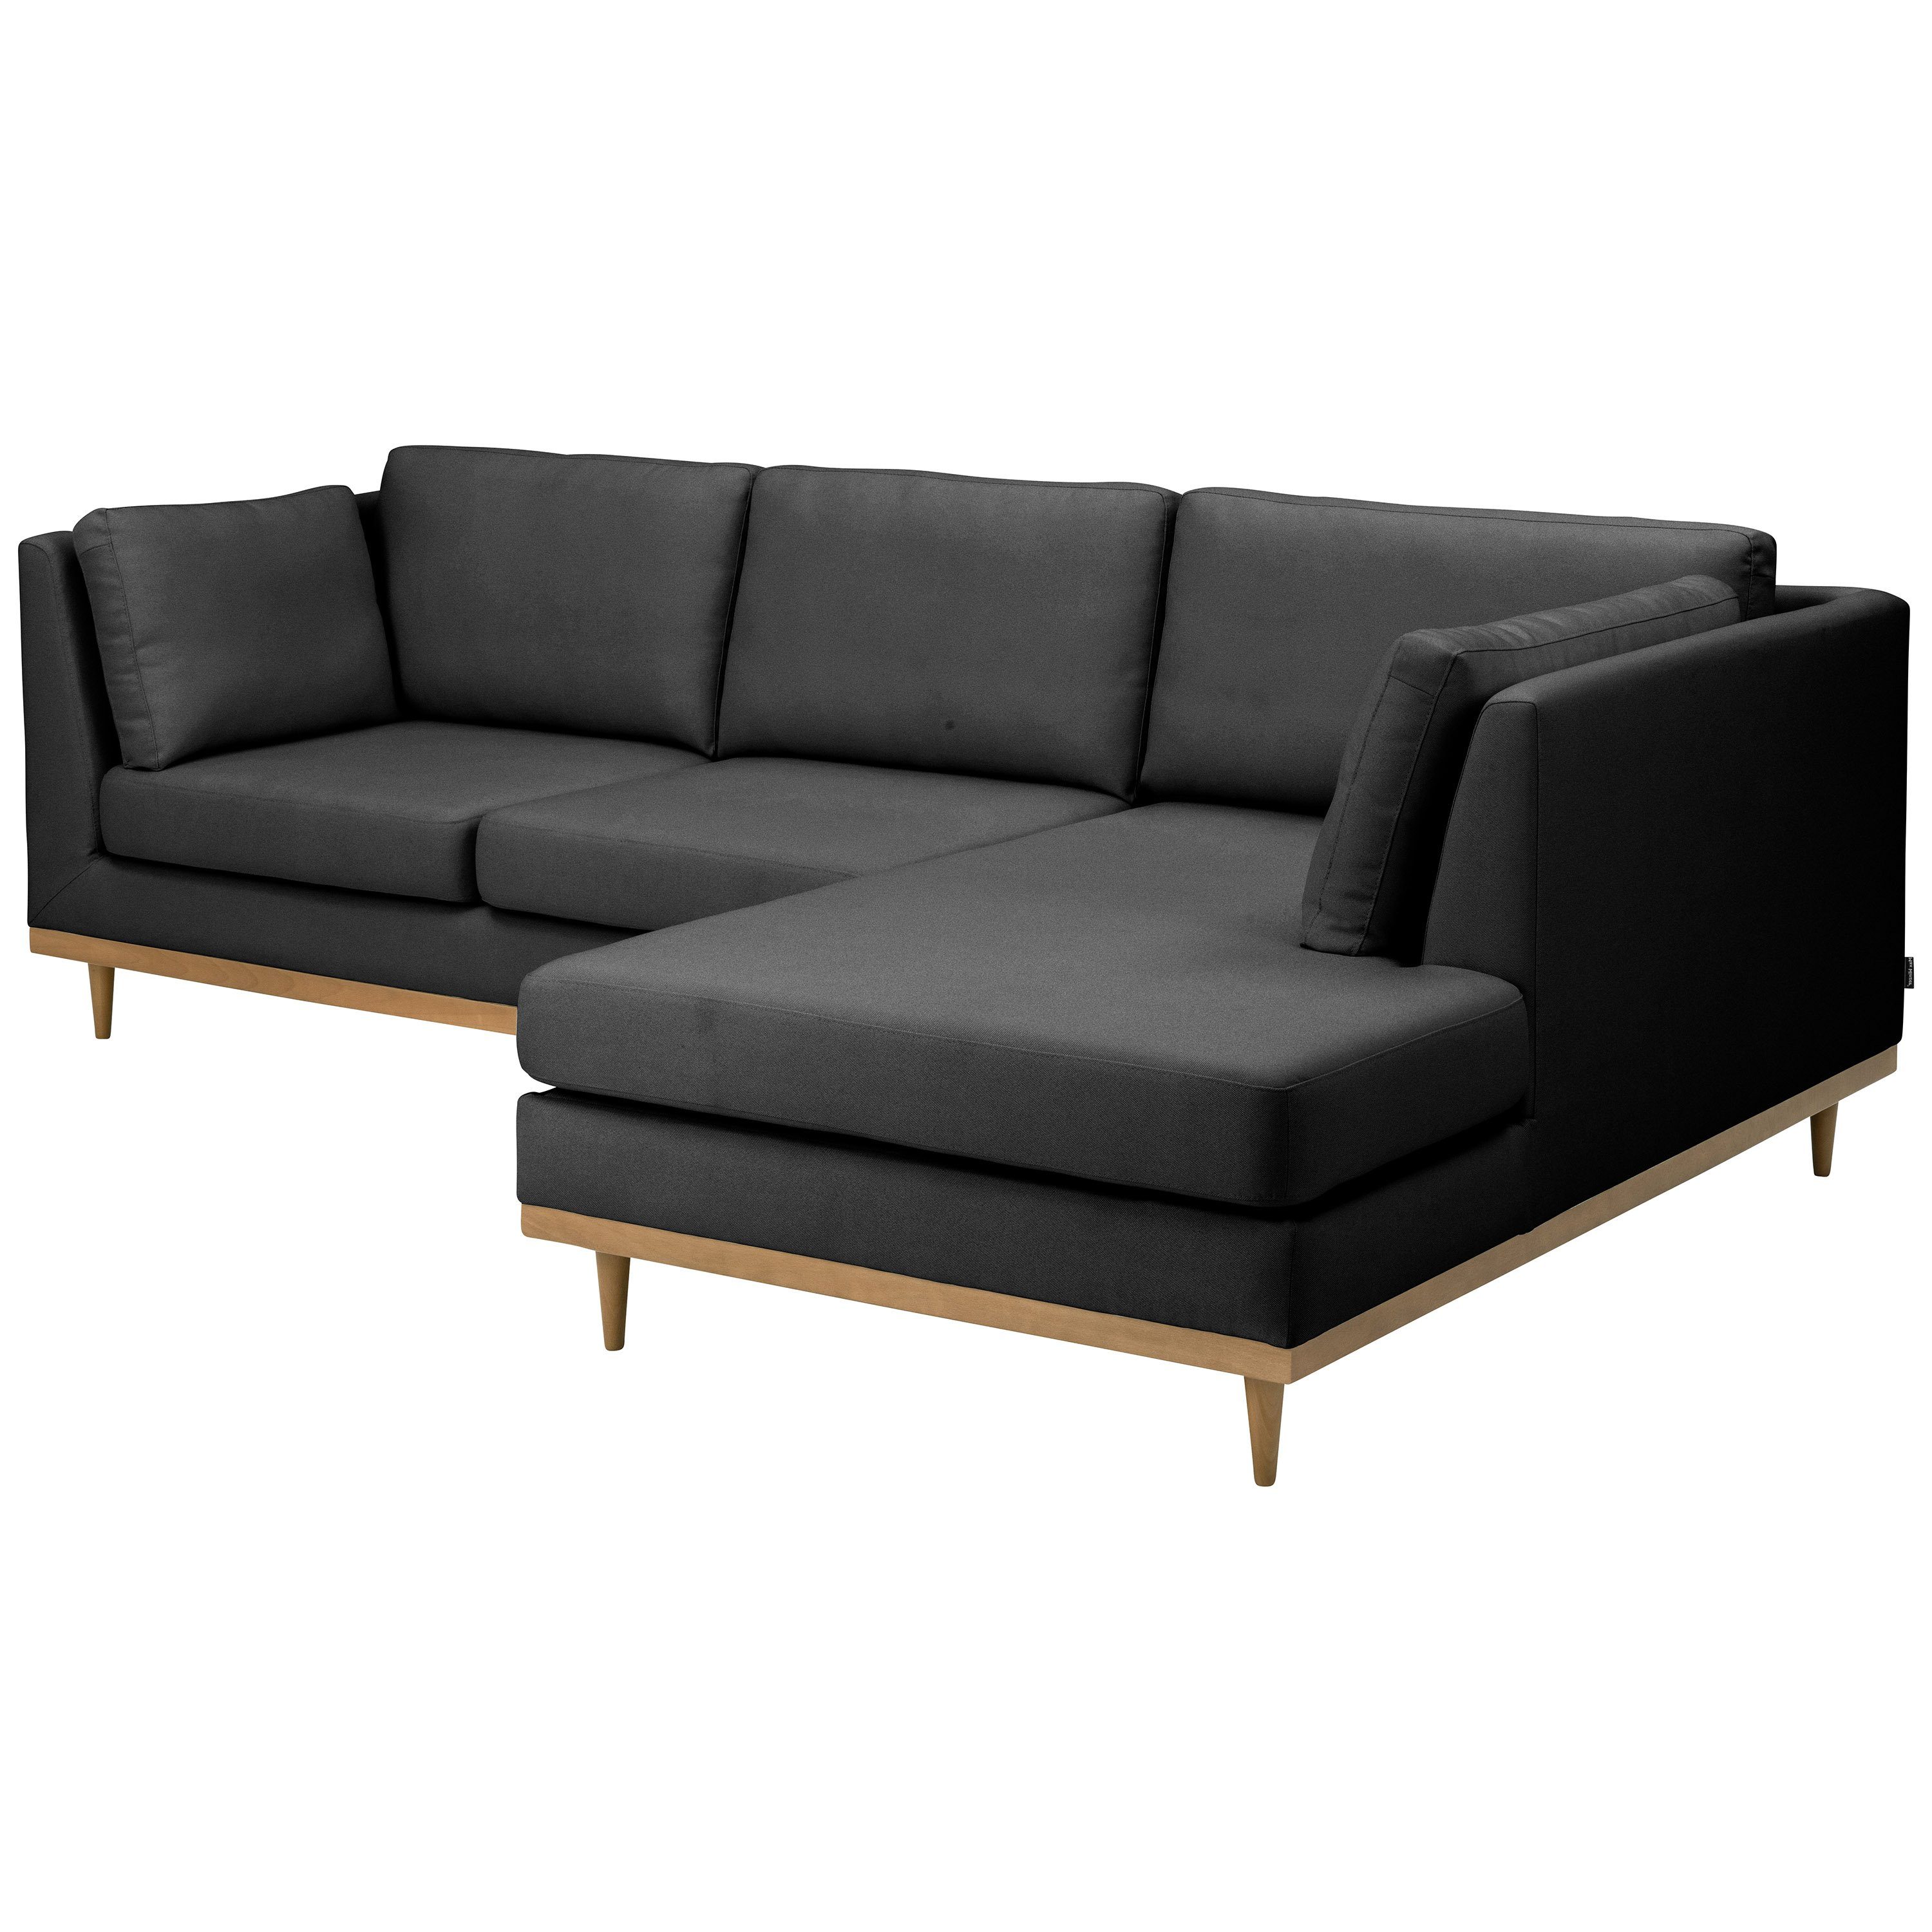 Stück, Winzer® Ecksofa 2-Sitzer mit 1 Larsen Flachgewebe Ecksofa graphit, Sofa Max rechts links skandinavischen im Design Sofa